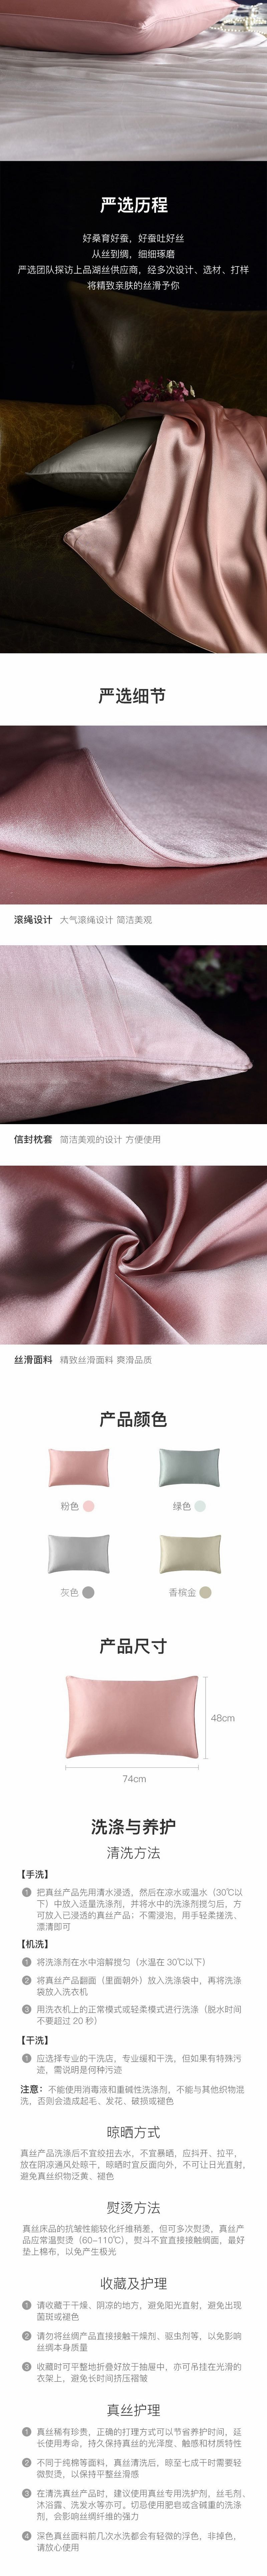 Mulberry Silk Pillowcase Green 1PC [5-7 Days U.S. Free Shipping] 